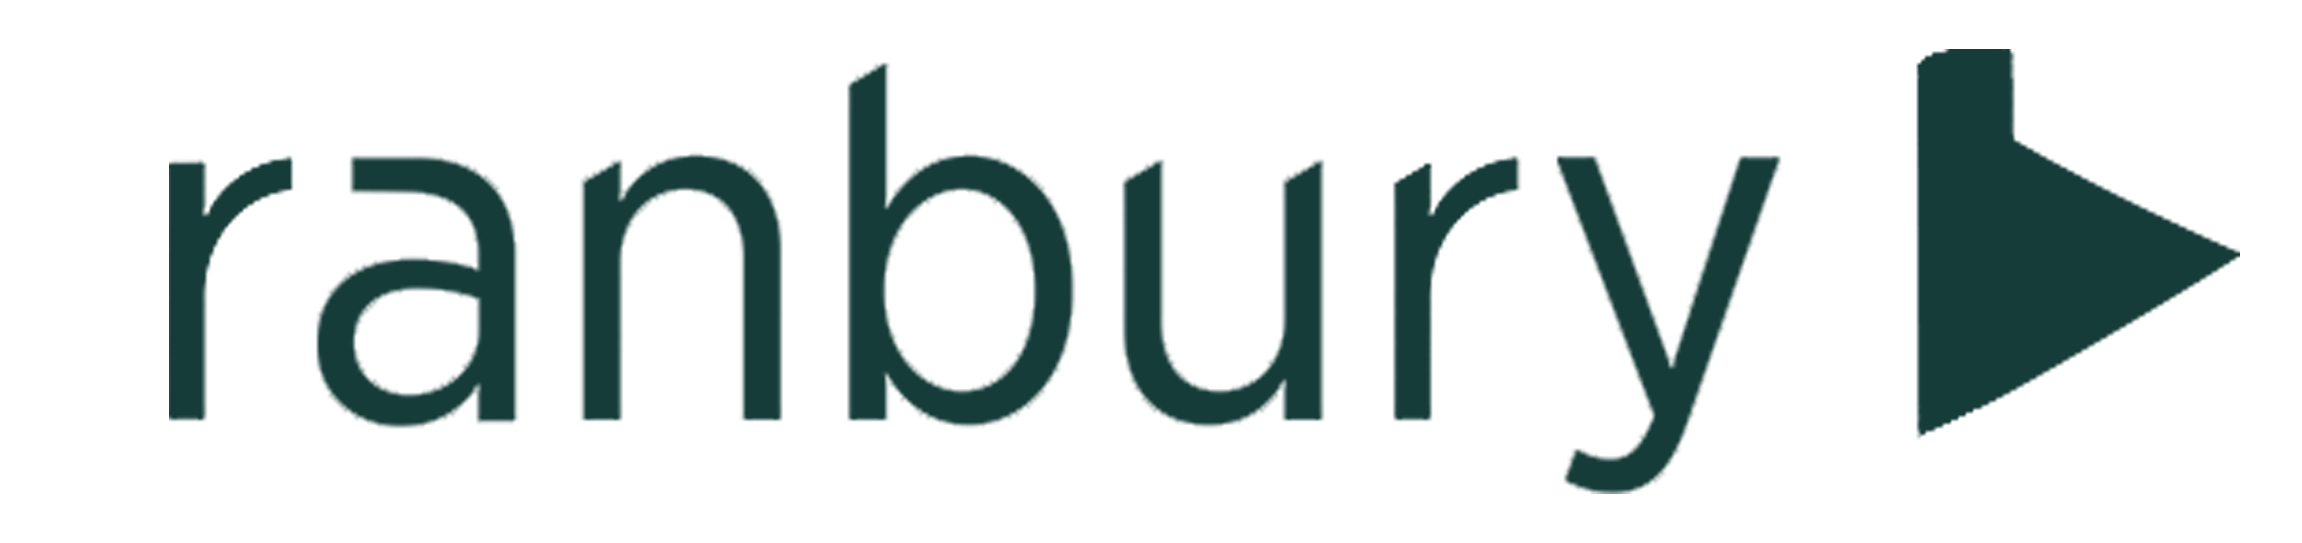 Ranbury logo.png